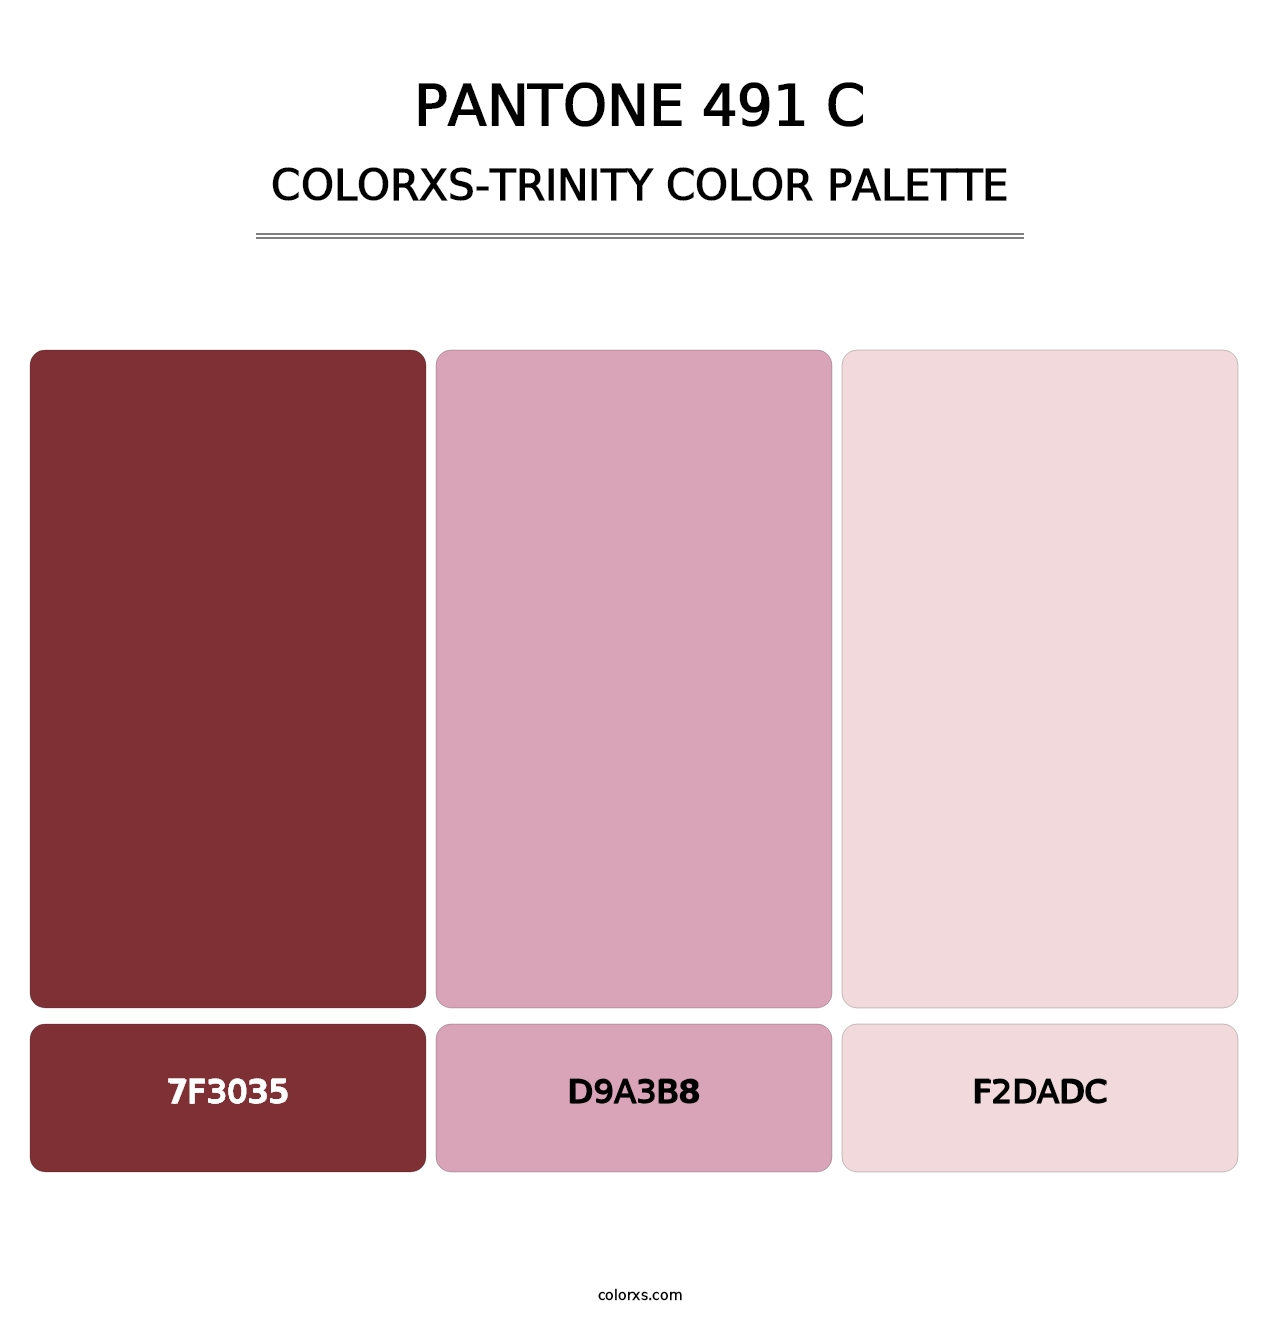 PANTONE 491 C - Colorxs Trinity Palette